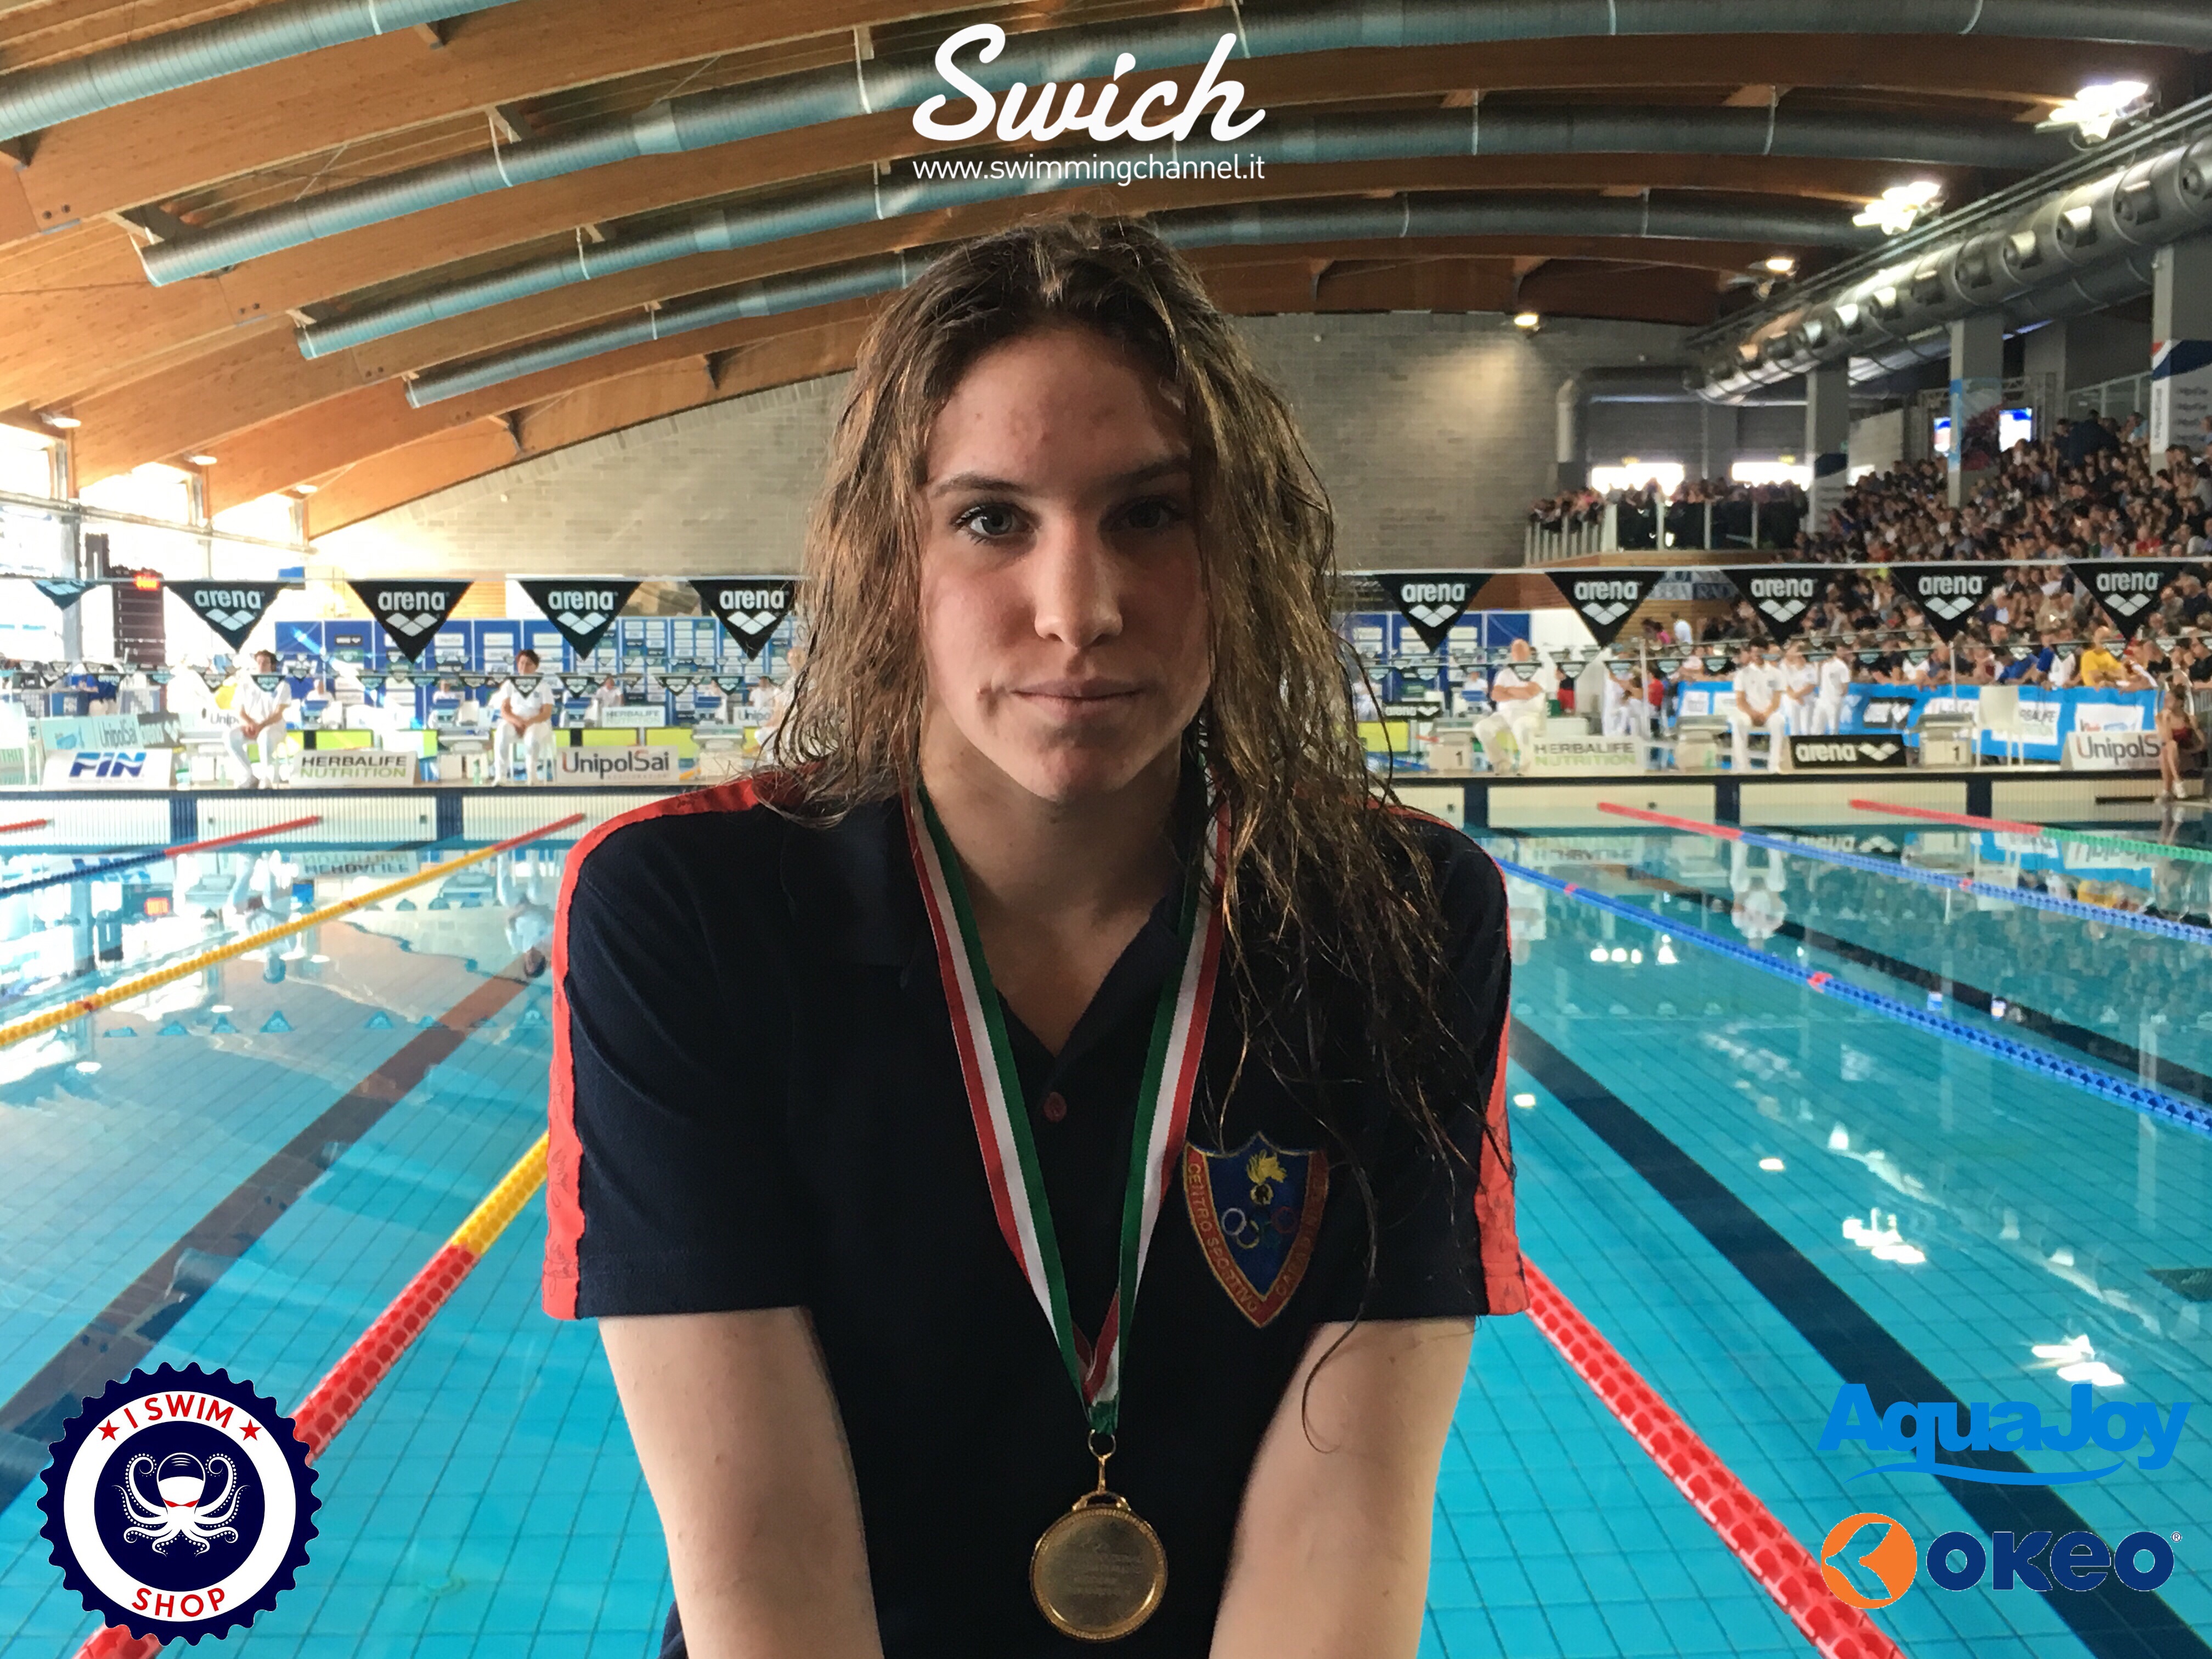 Giulia D'Innocenzo - PH. iSwim Shop - Swimming Channel